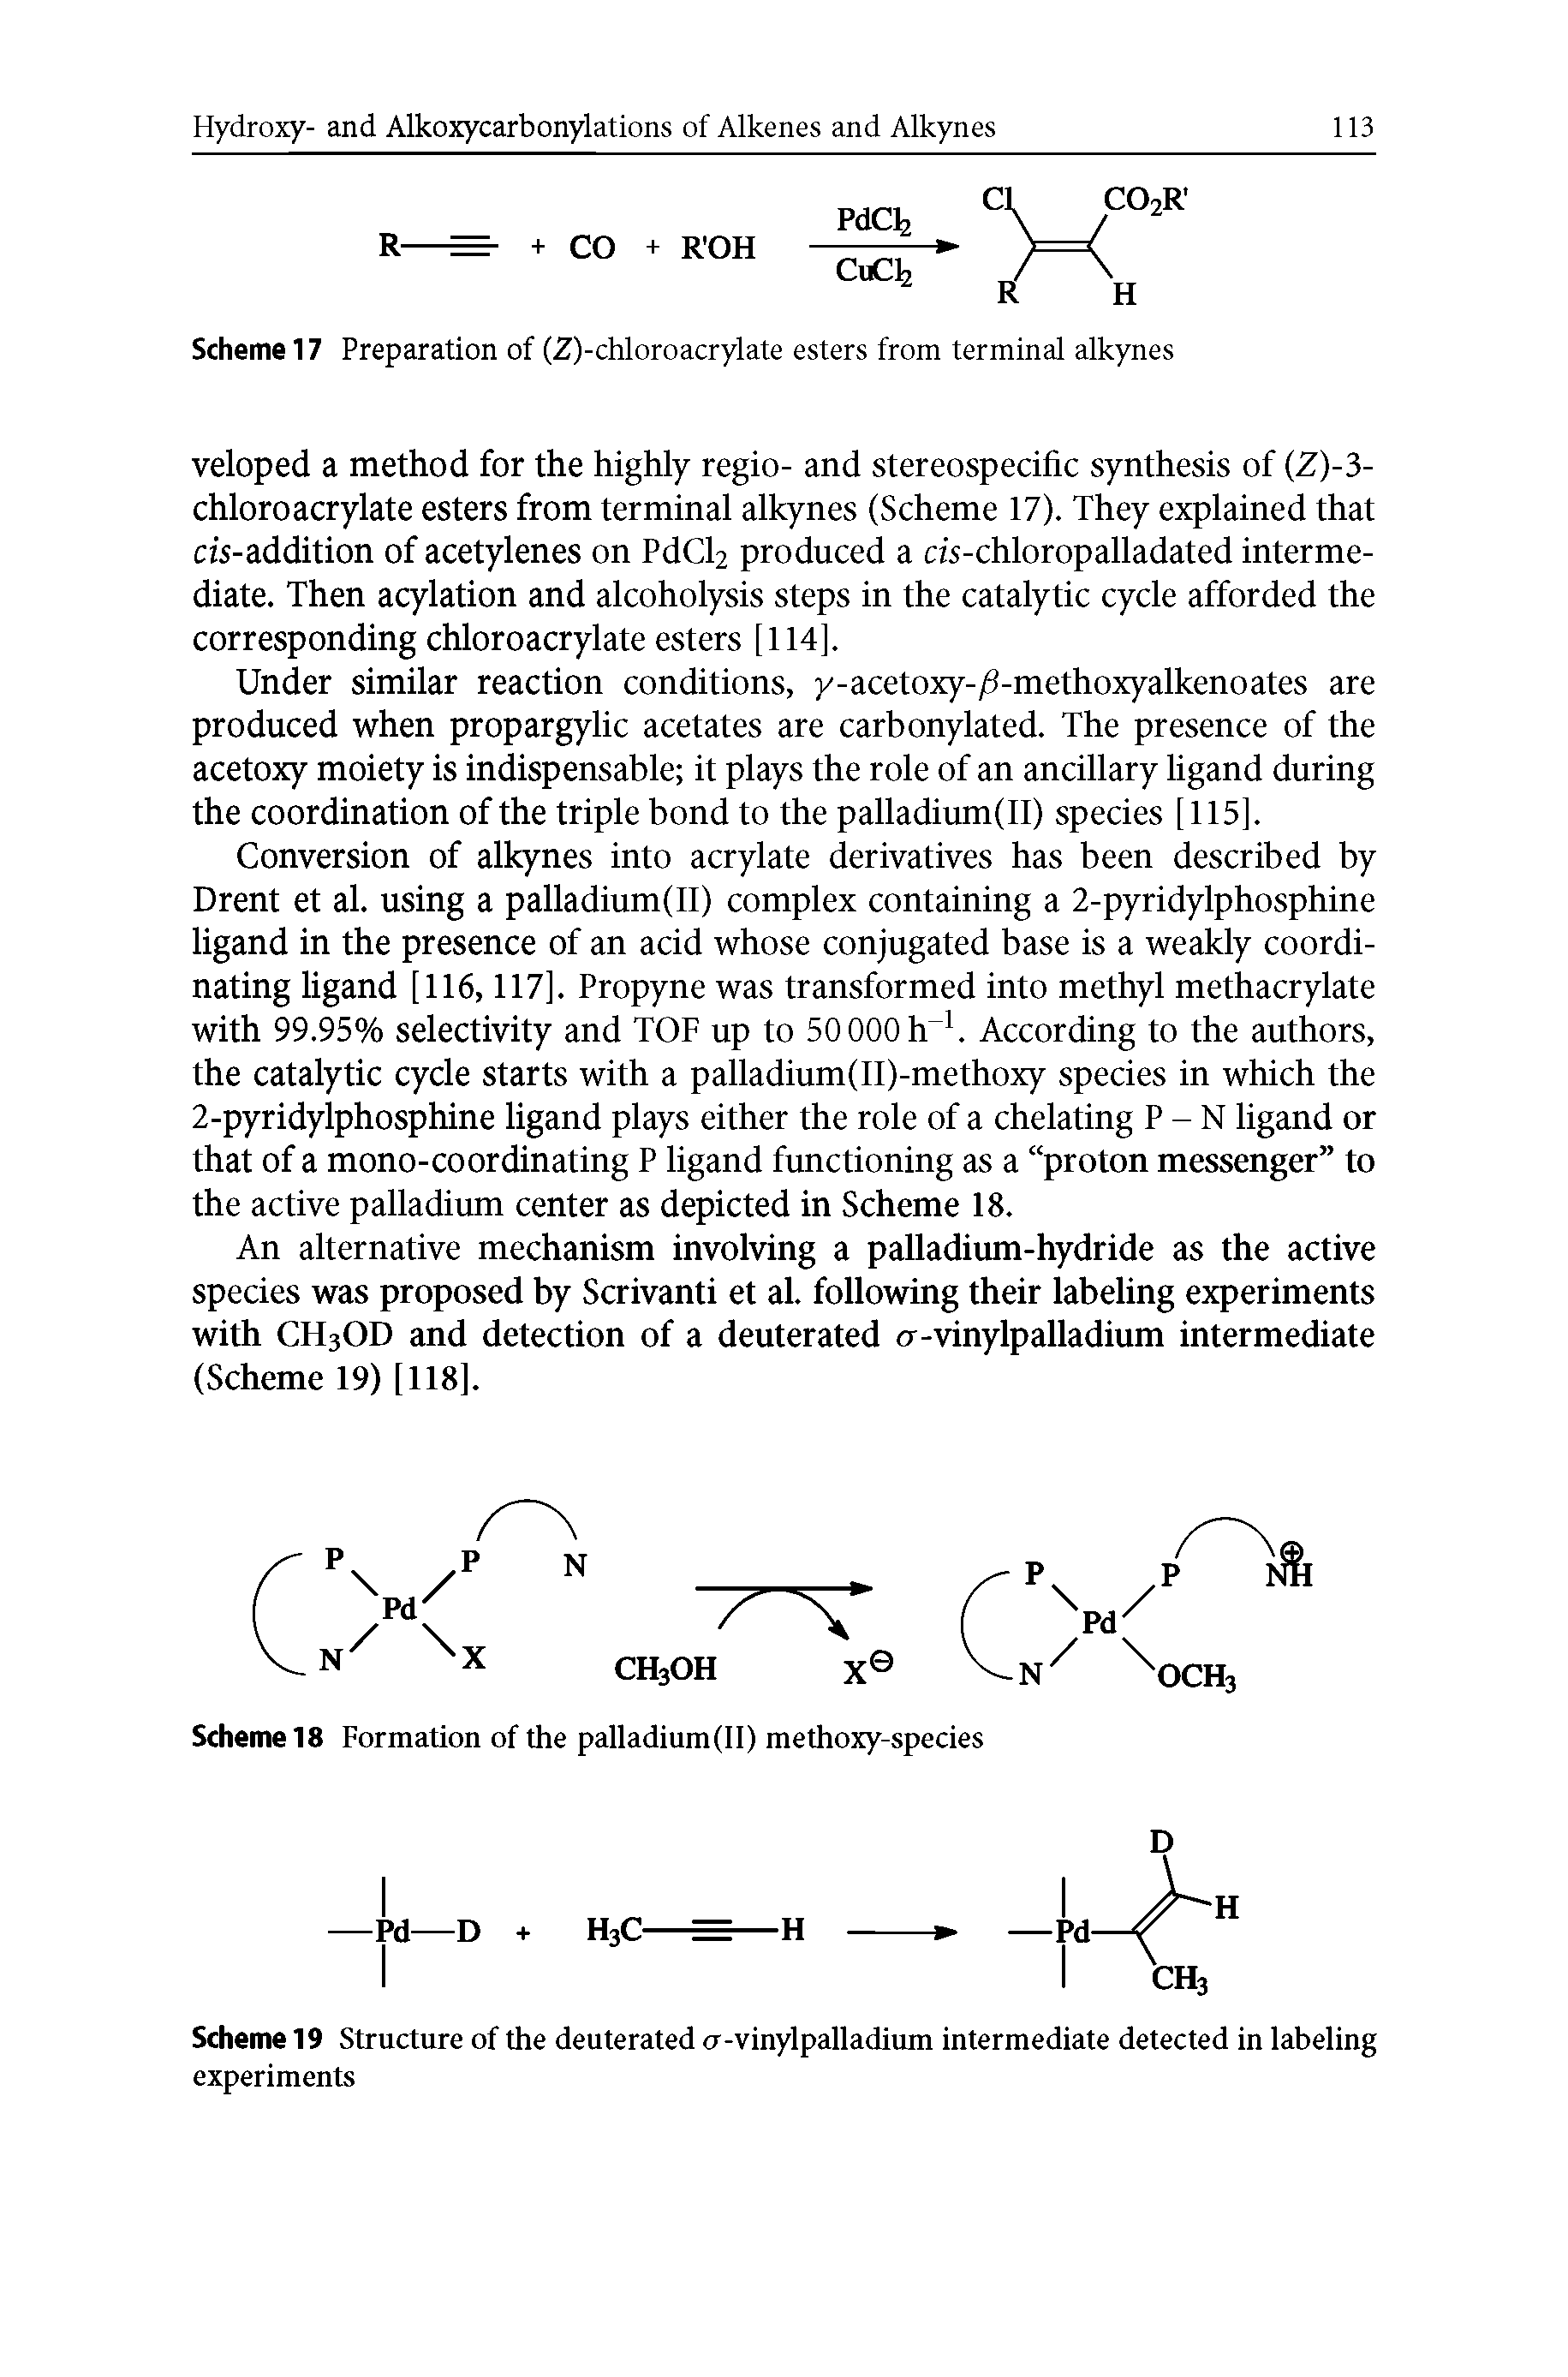 Scheme 17 Preparation of (Z)-chloroacrylate esters from terminal alkynes...